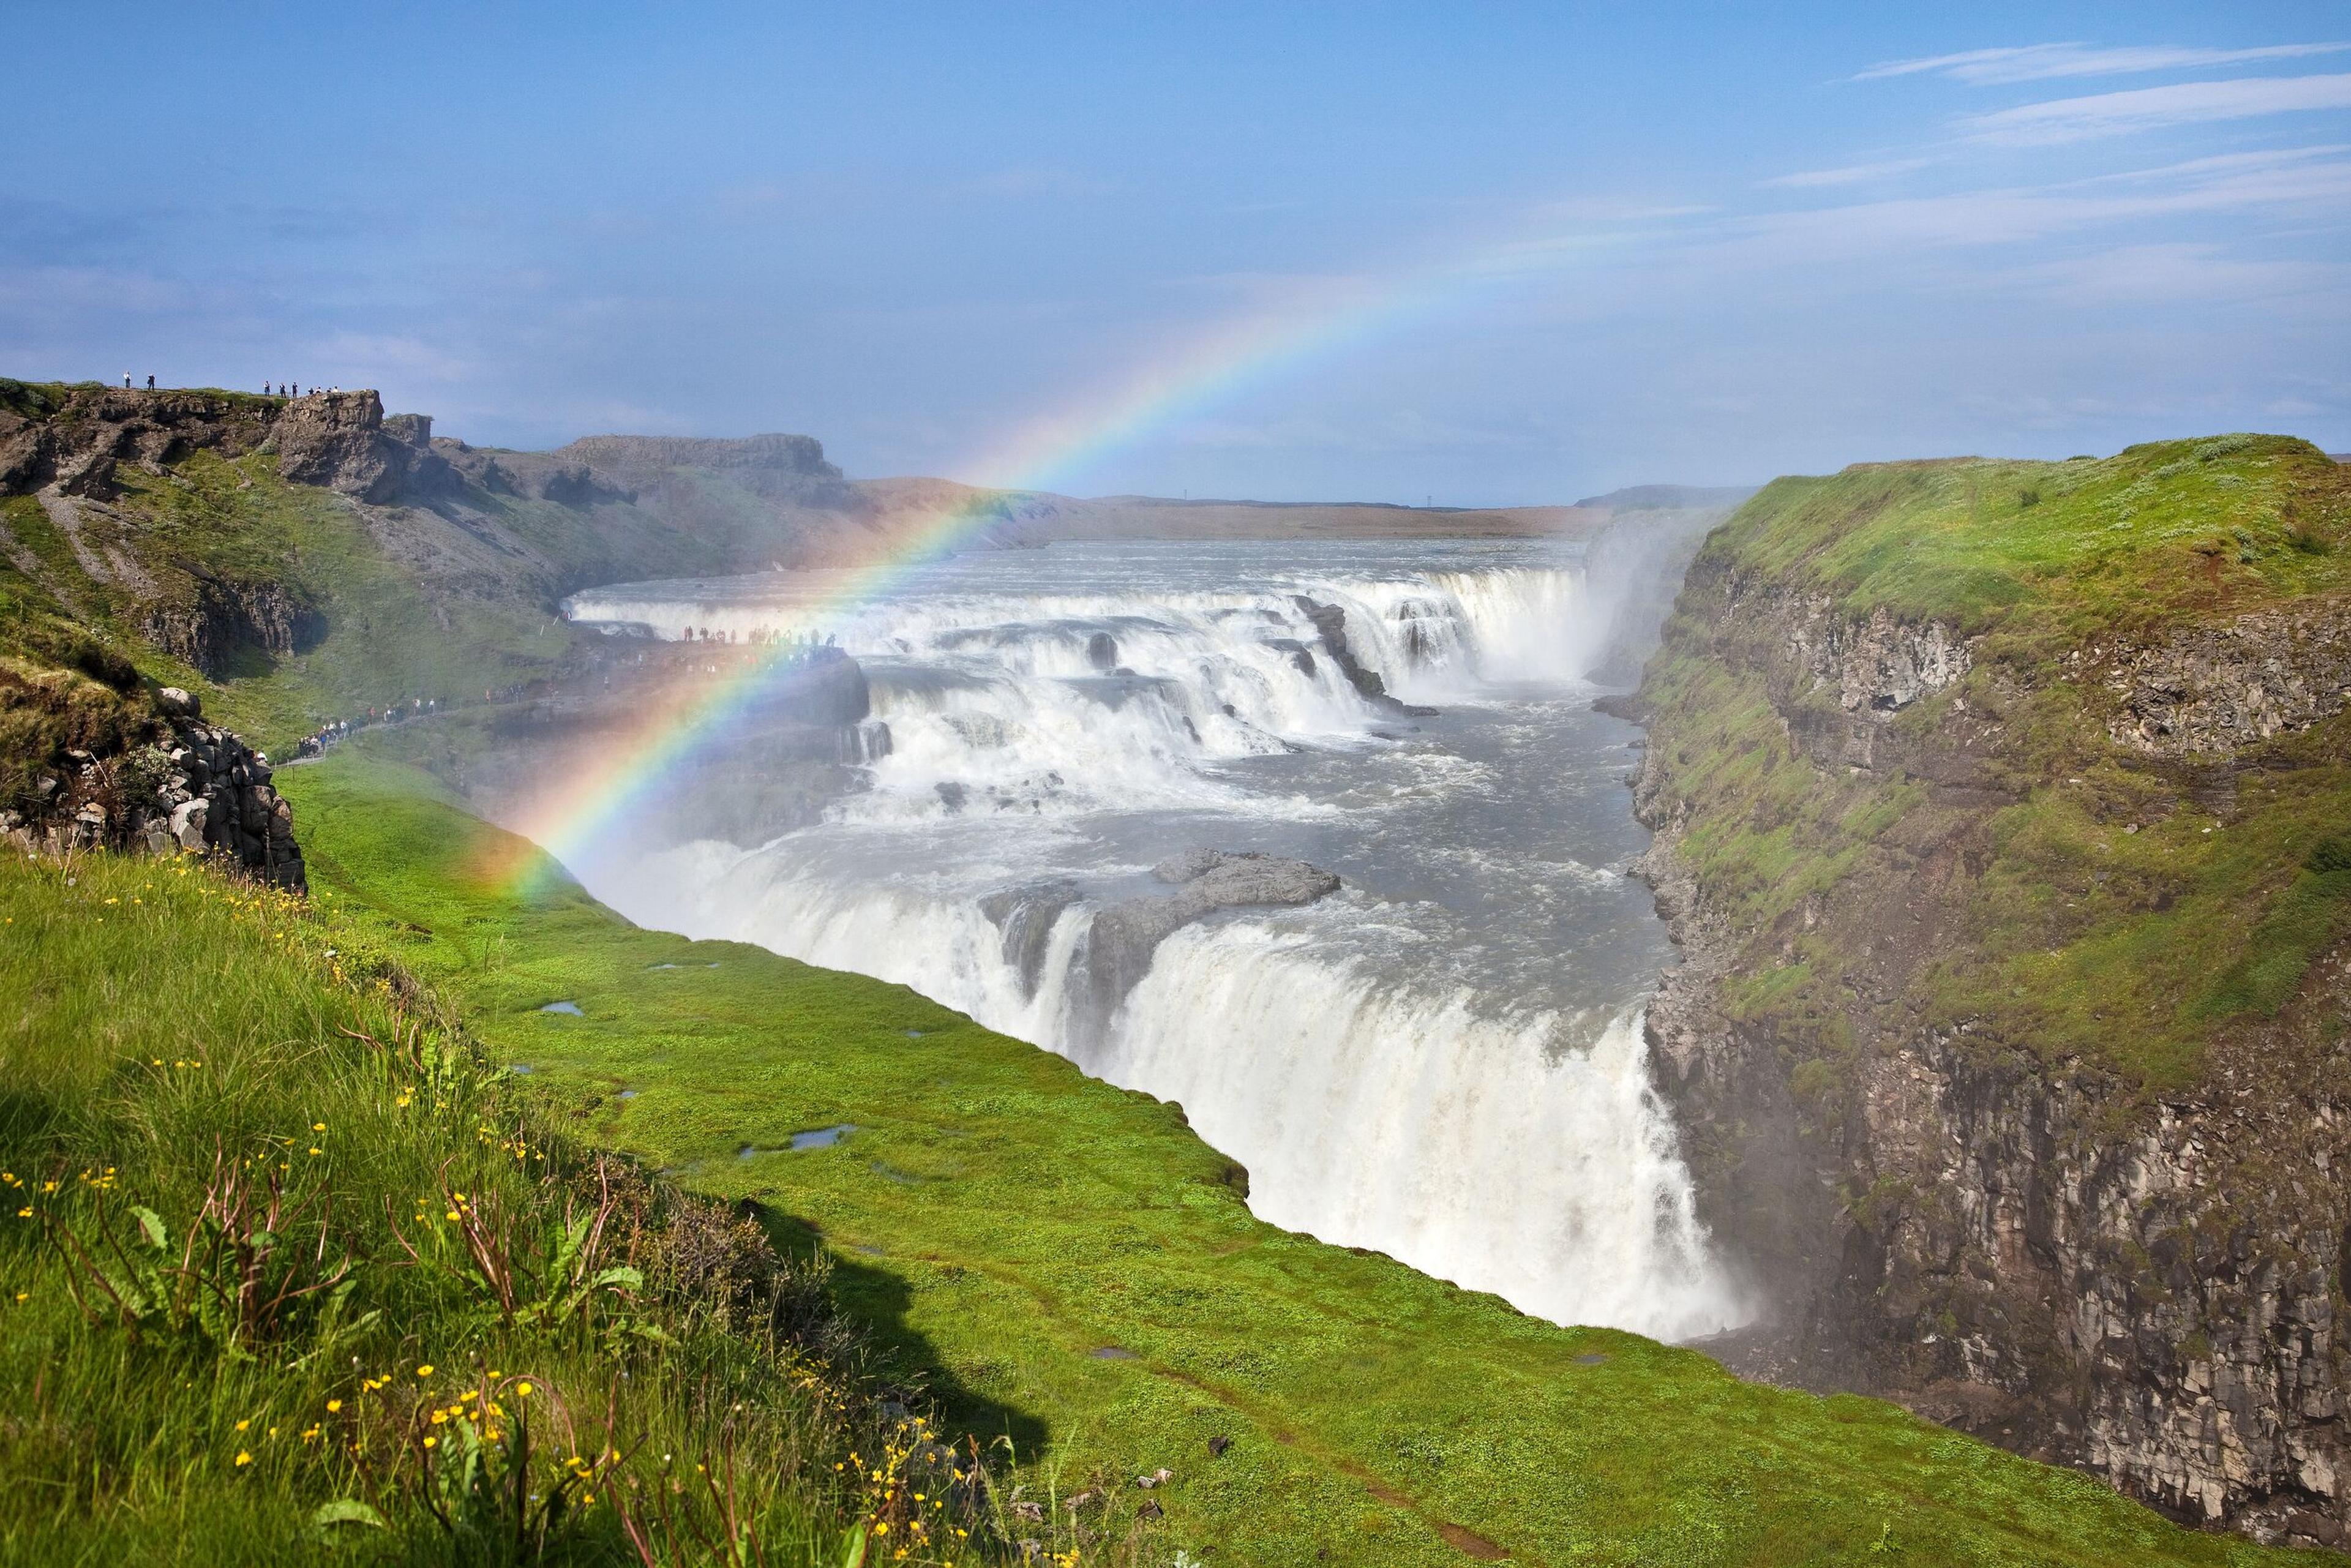 Gullfoss Waterfall during summertime with a striking rainbow.